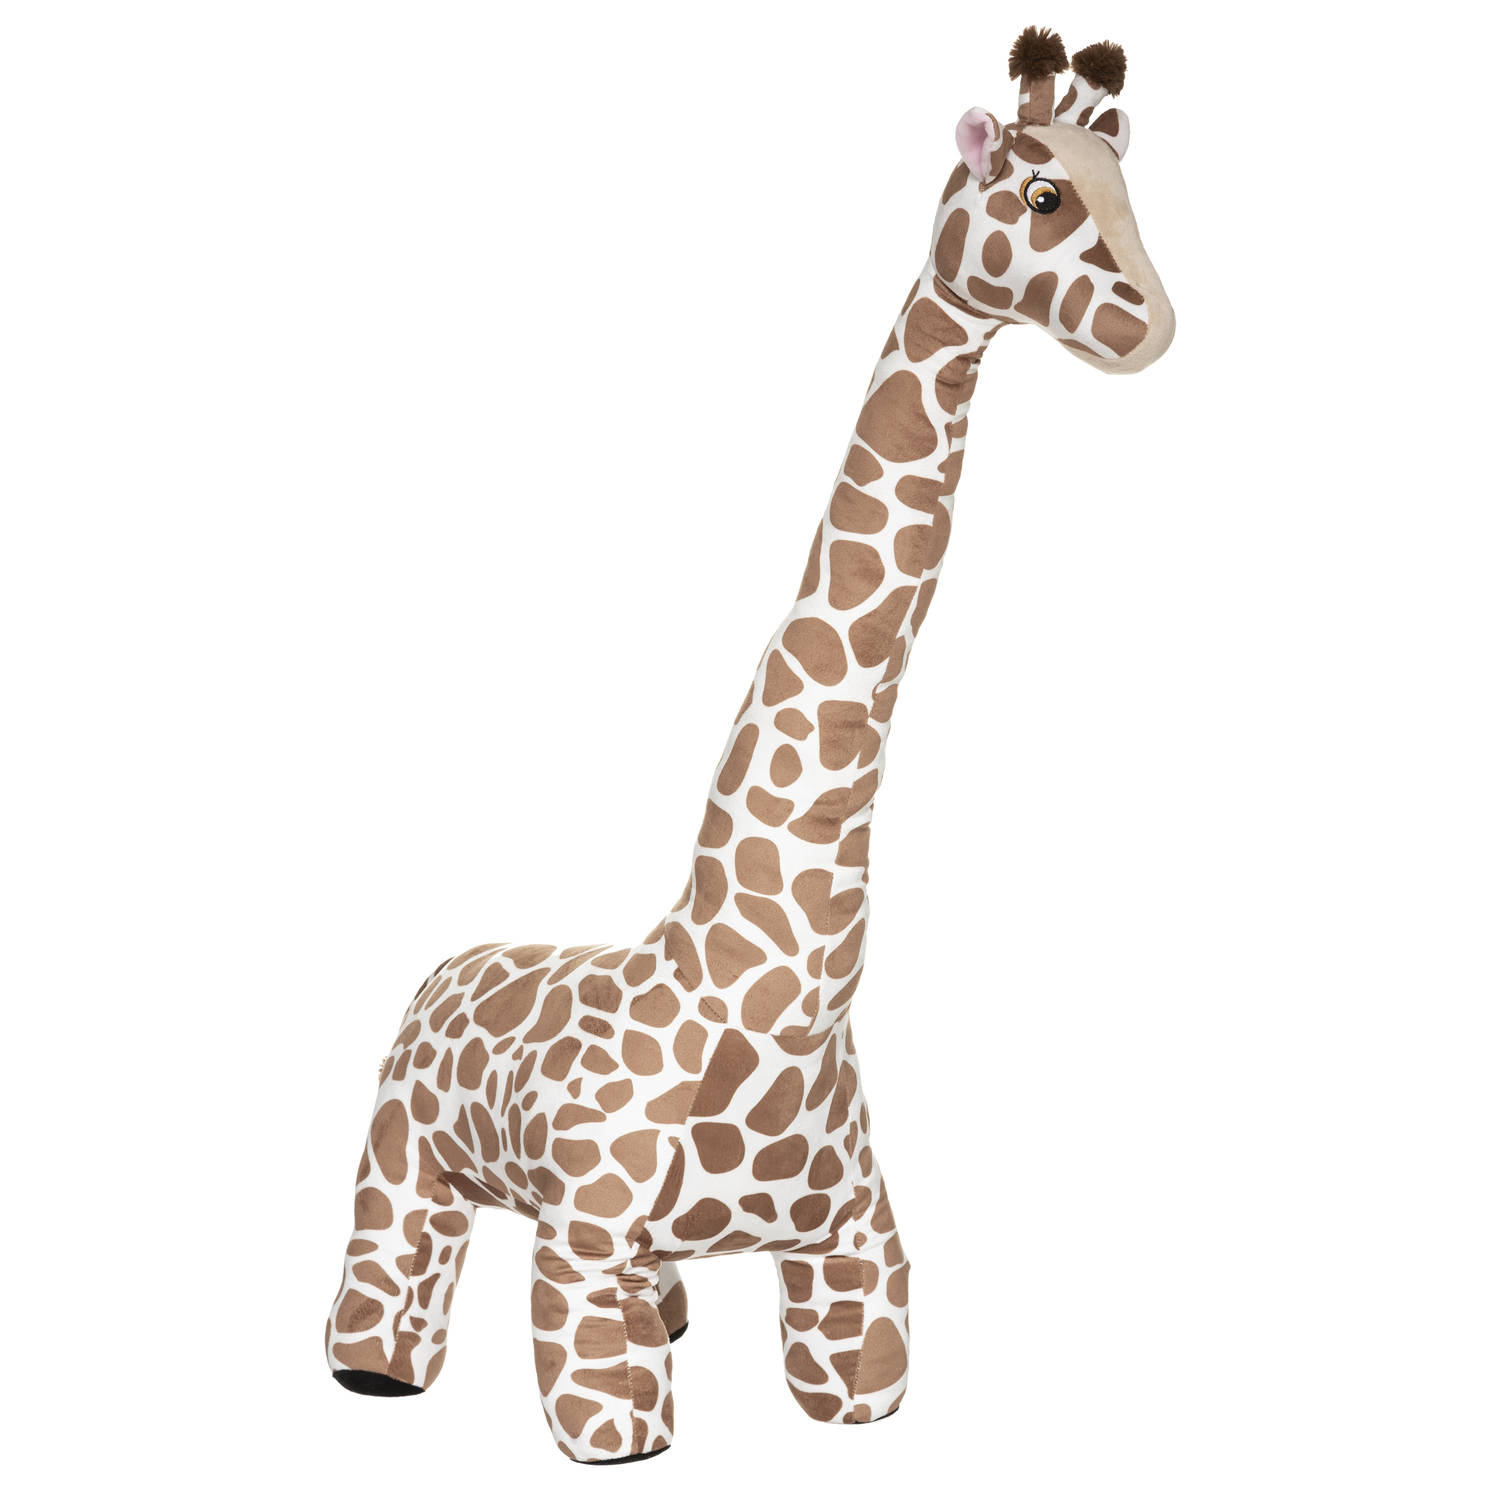 Giraffe knuffel van zachte pluche gevlekt patroon 100 cm Extra groot Knuffeldier